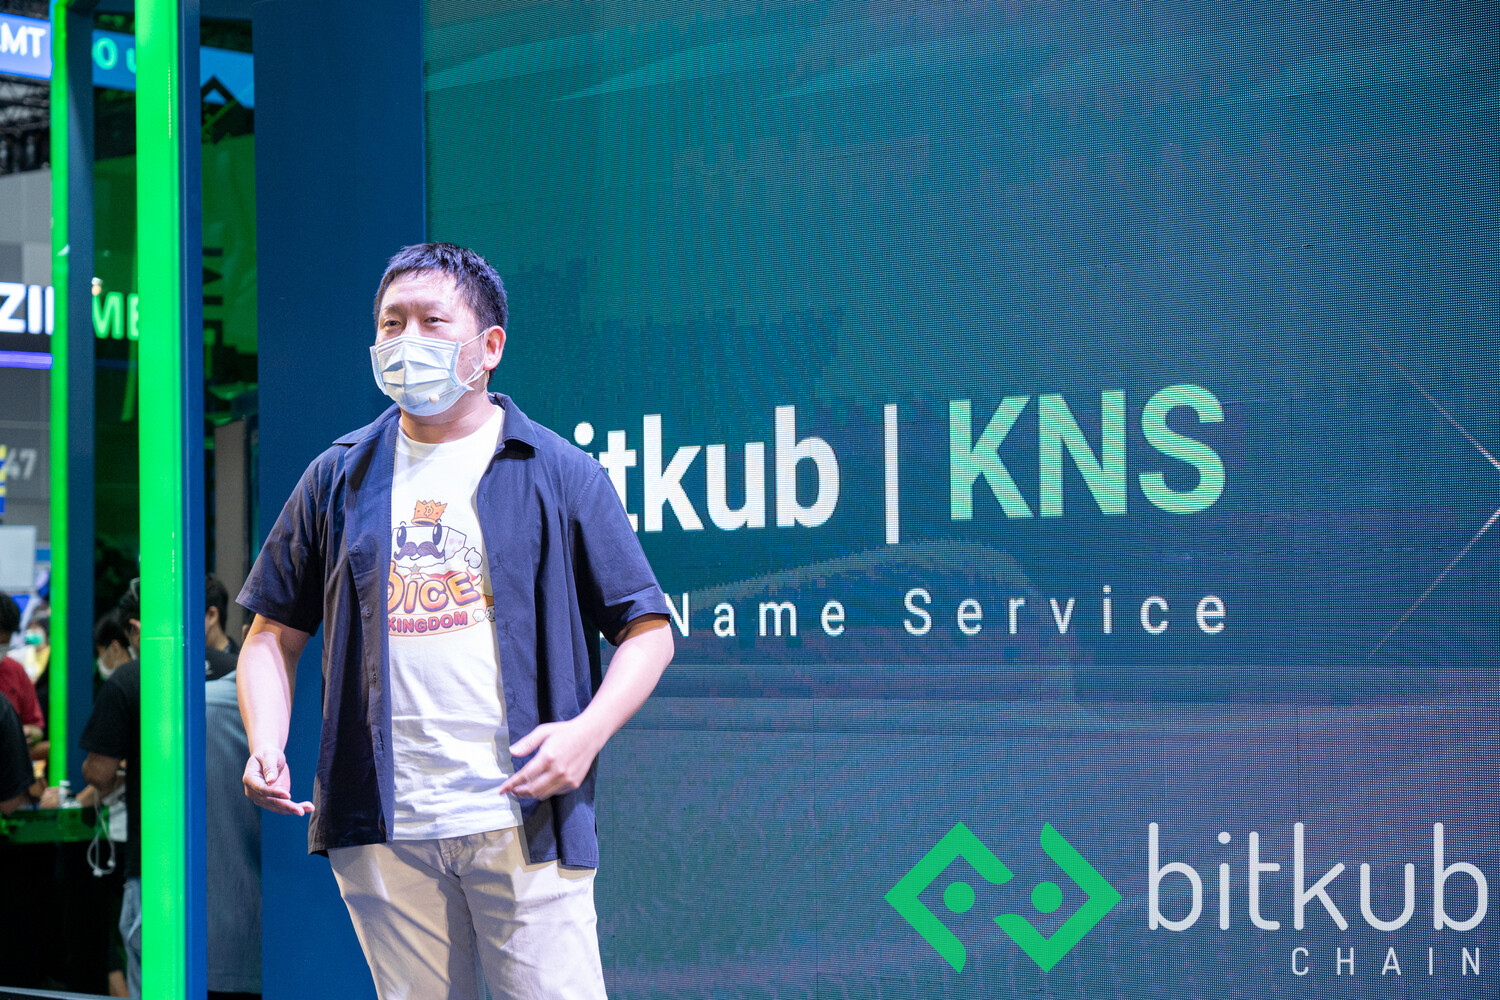 Bitkub Blockchain Technology เปิดตัวโปรเจกต์ KNS (KUB Name Service) ครั้งแรกกับการเปิดให้จดจองชื่อโดเมนเลขกระเป๋าดิจิทัลบน Bitkub Chain